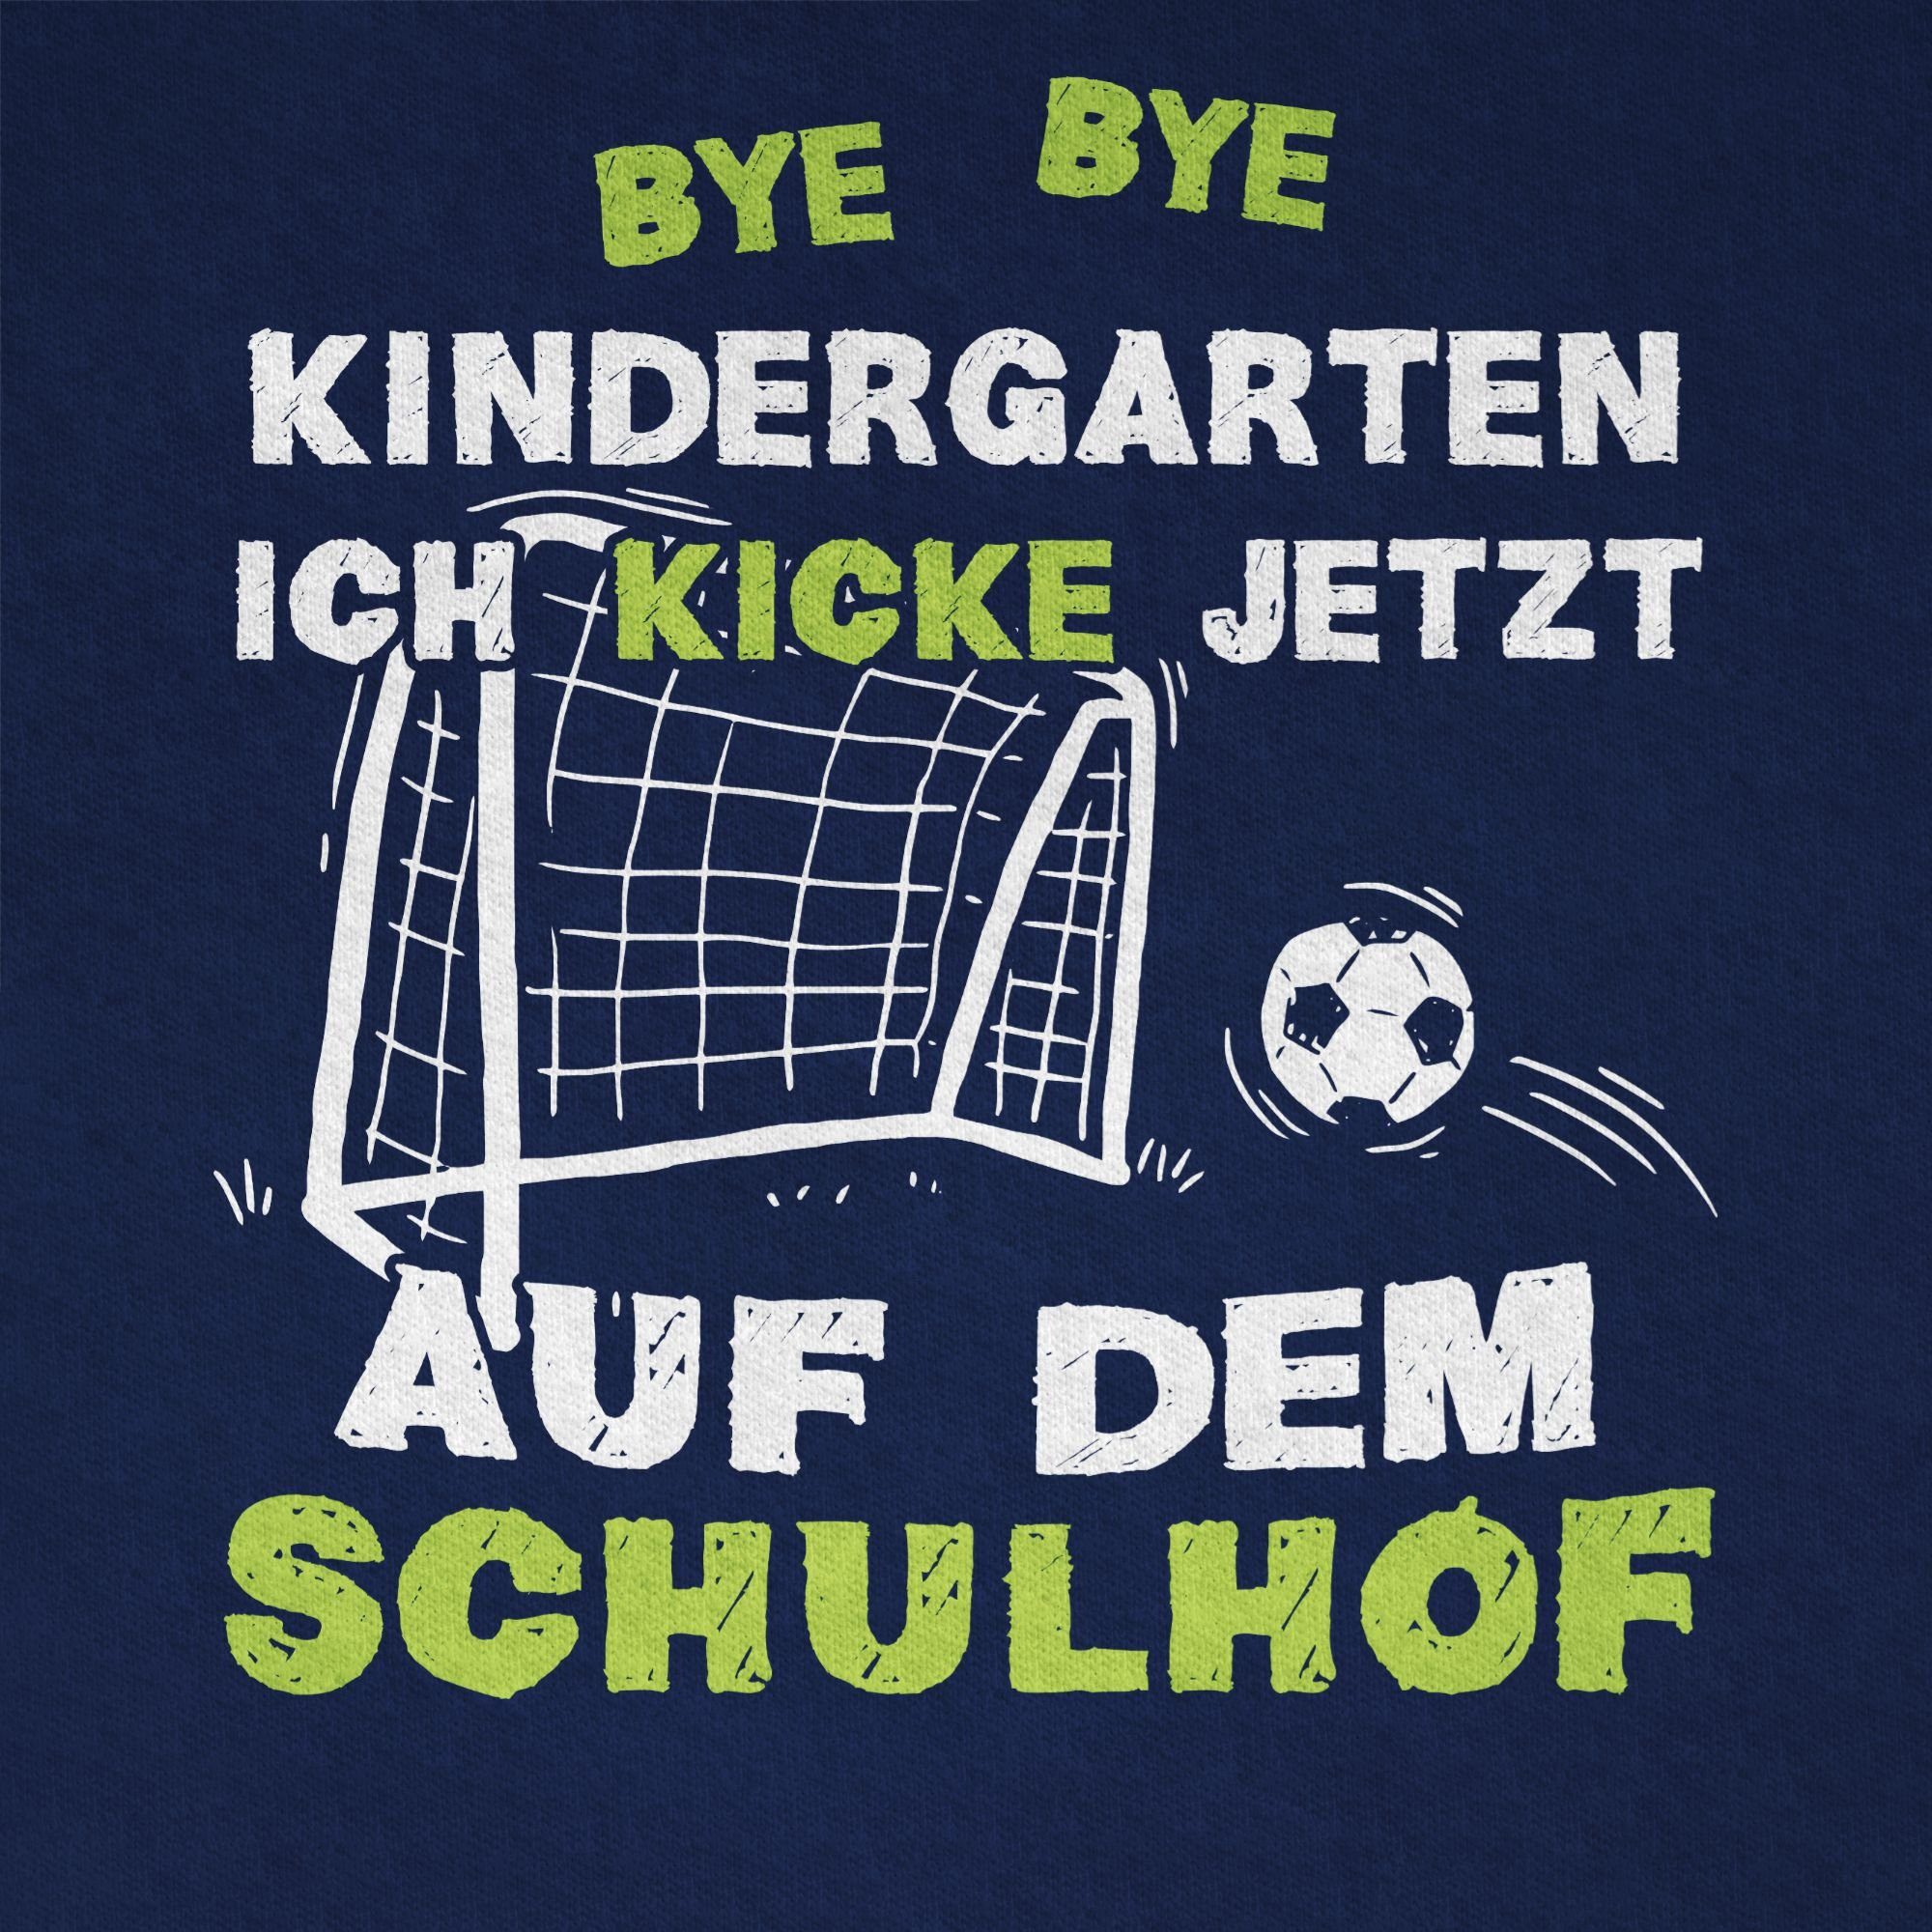 Junge Bye Shirtracer Einschulung Schulanfang Geschenke - Kicke Dunkelblau Bye Kindergarten Schulhof T-Shirt 01